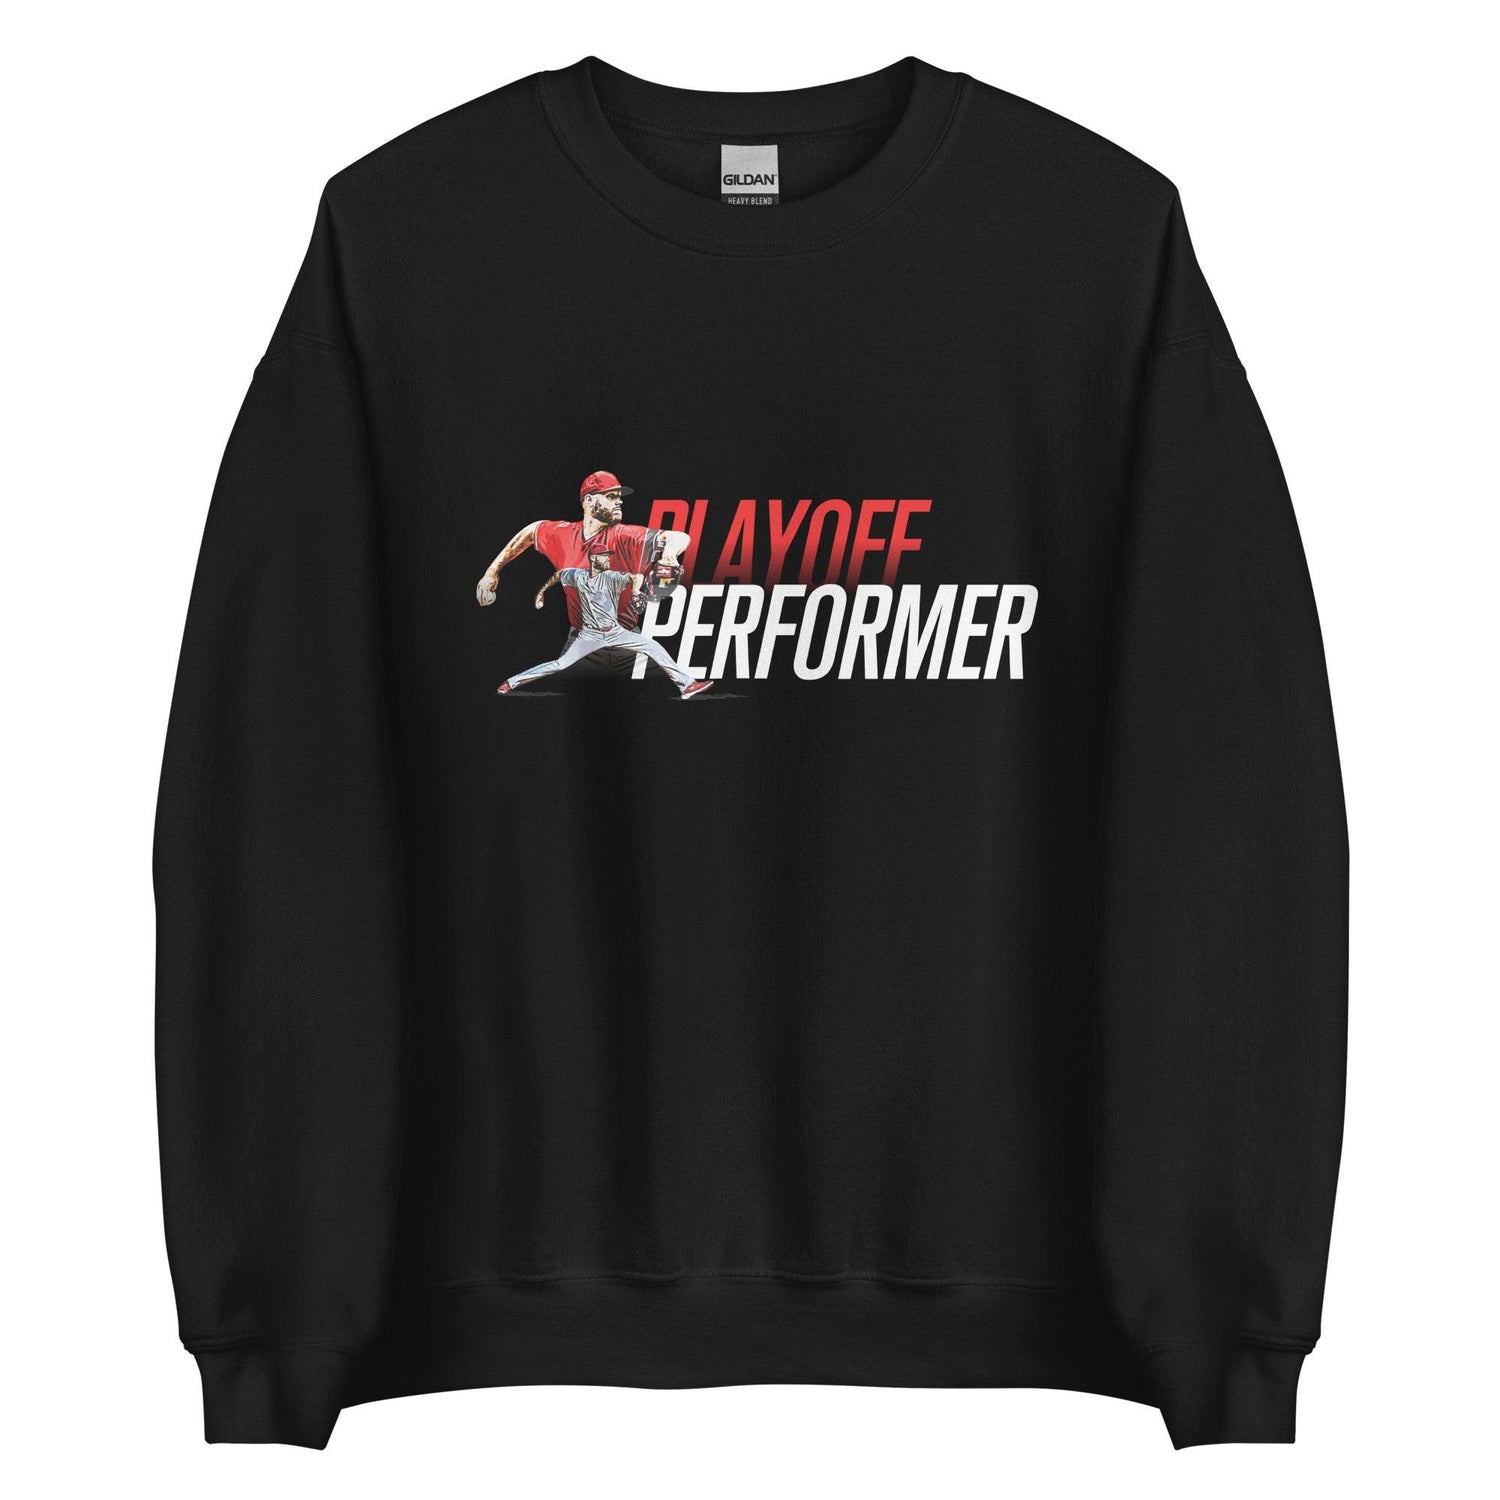 Zack Wheeler "Playoff Performer" Sweatshirt - Fan Arch